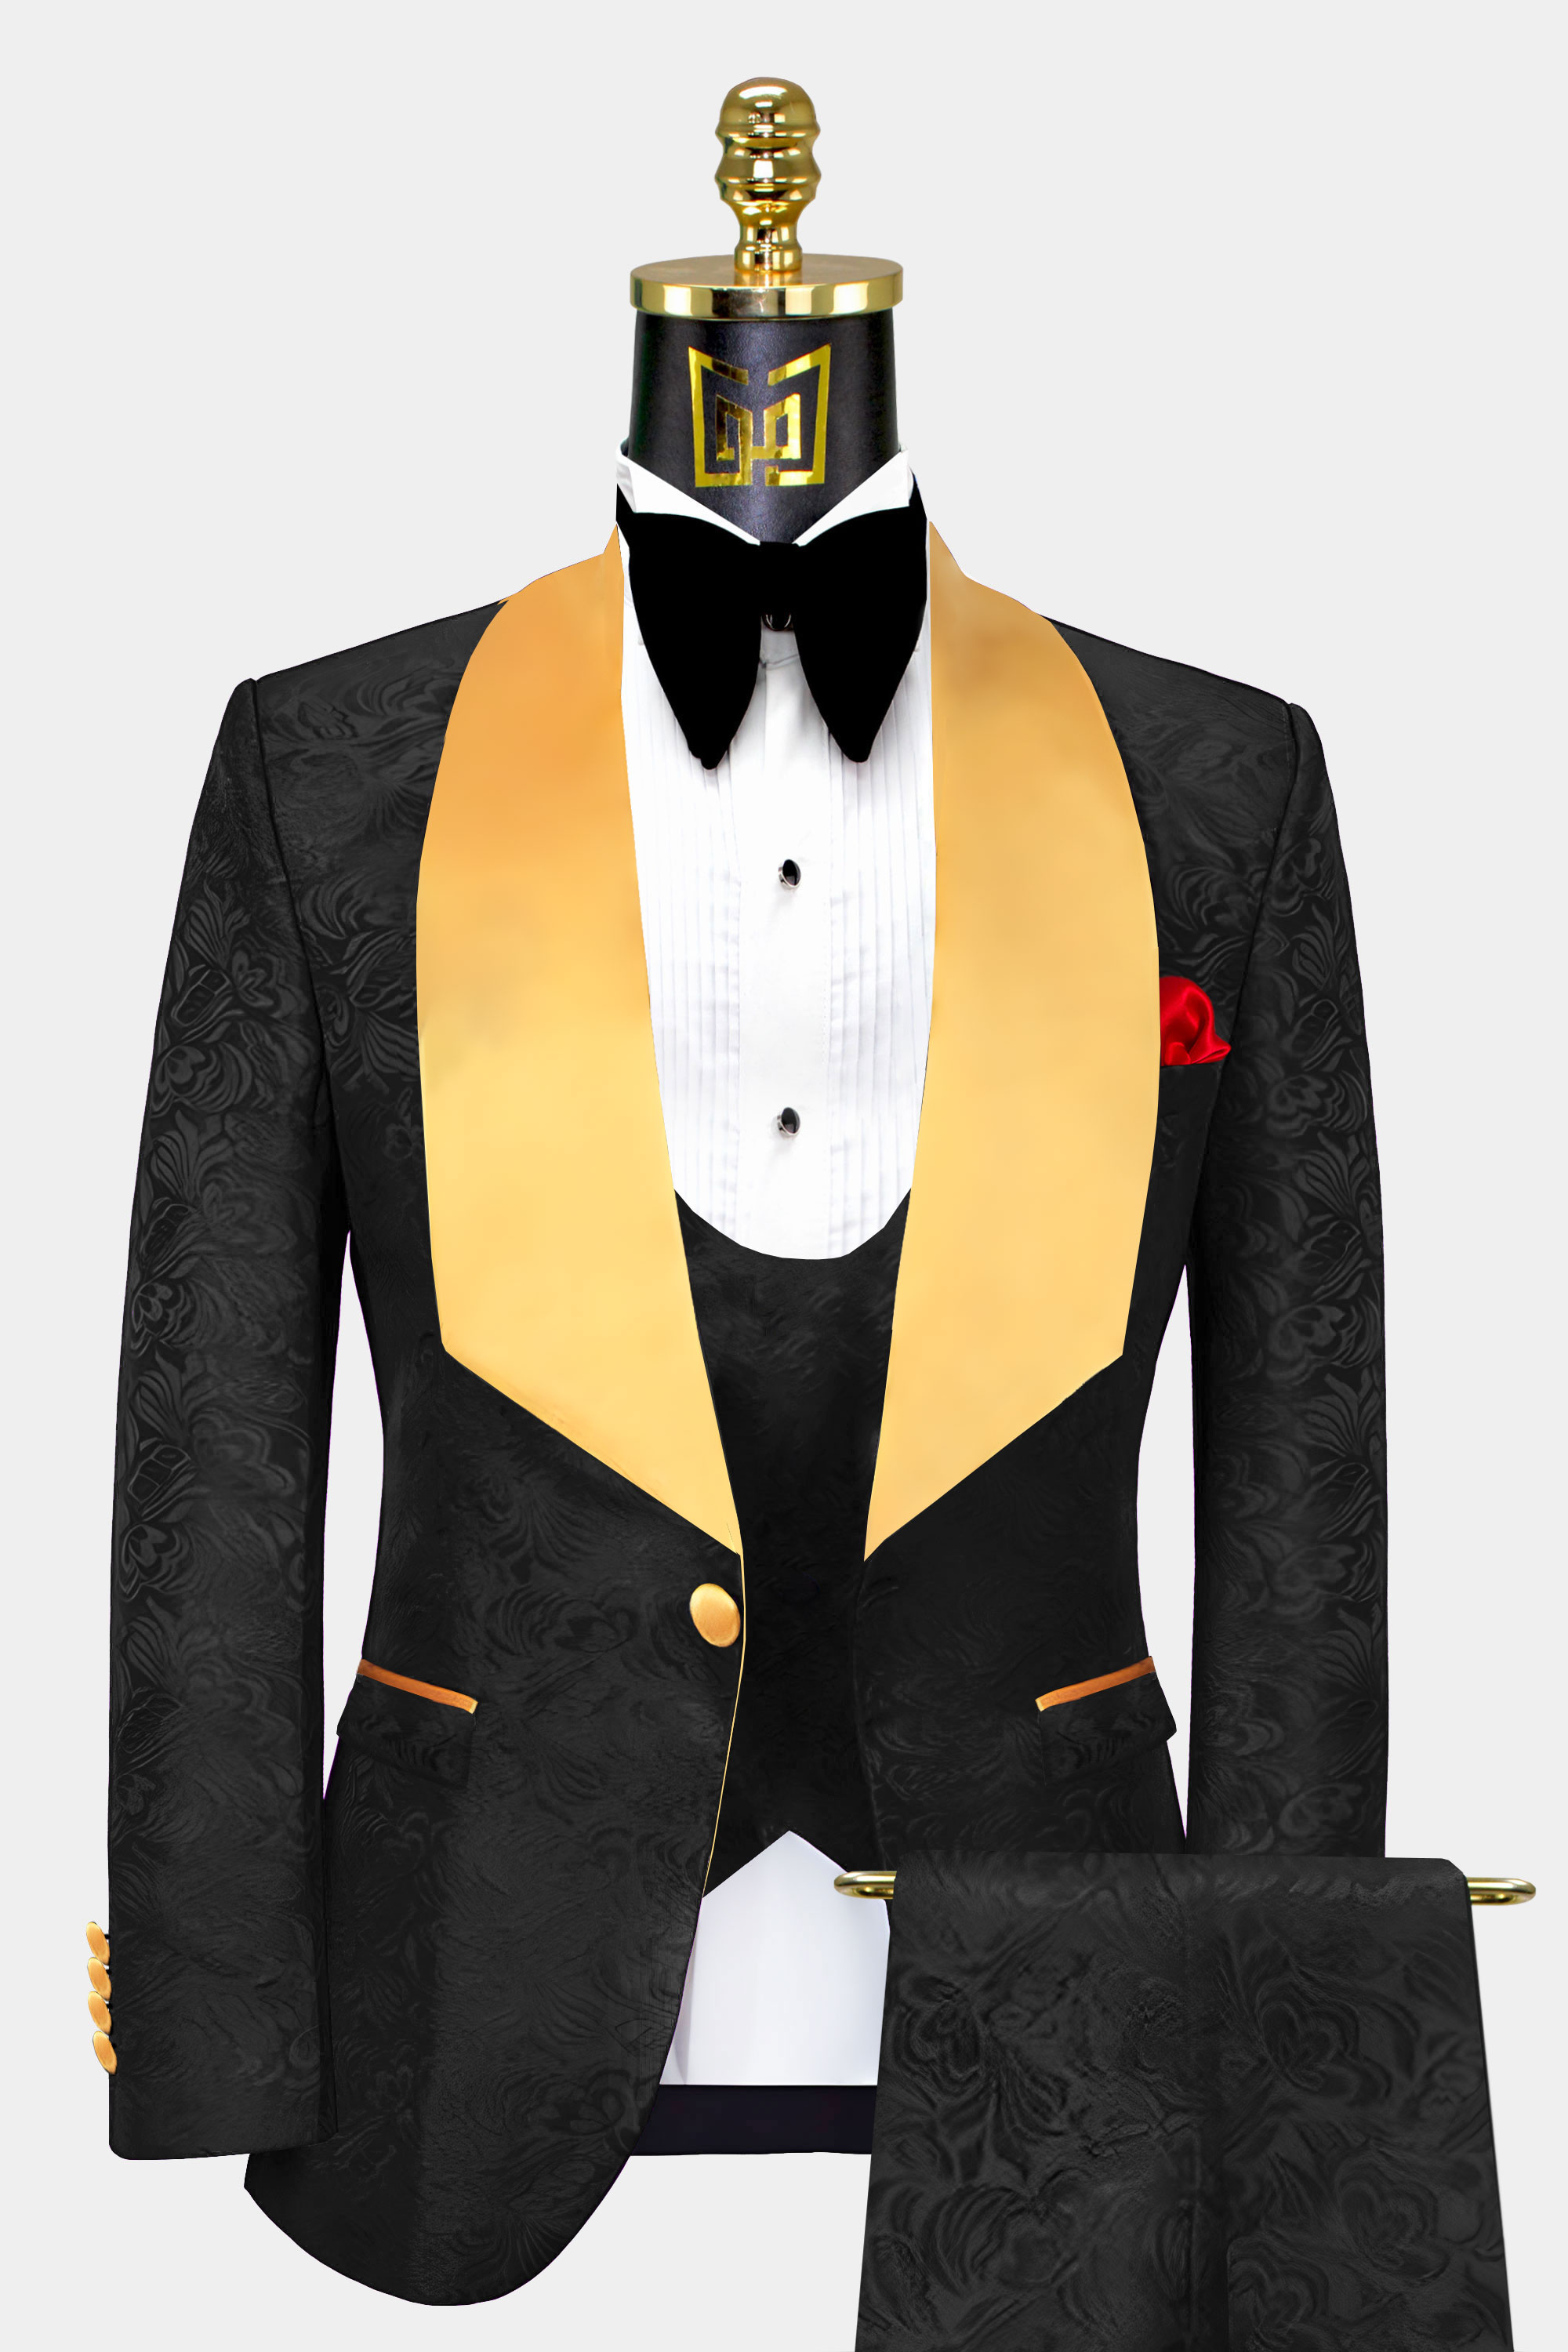 Mens-Black-Tuxedo-With-Gold-Trim-Wedding-Groom-Prom-Suit-from-Gentlemansguru.com